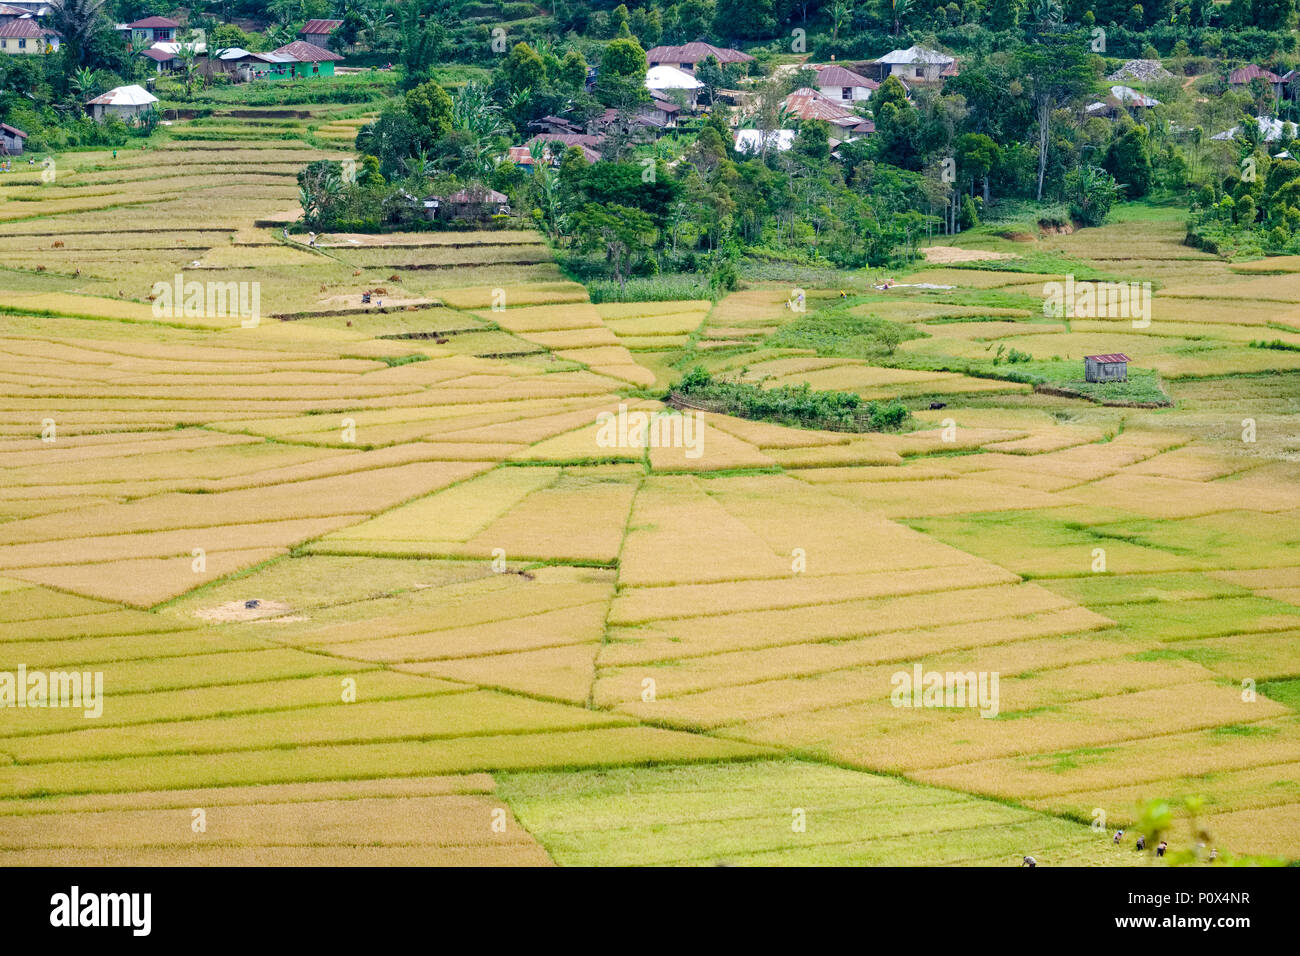 Spider web rice fields ('lingko') in Cancar Village, near Ruteng, Manggarai Regency, island of Flores (East Nussa Tenggara), Indonesia. Stock Photo